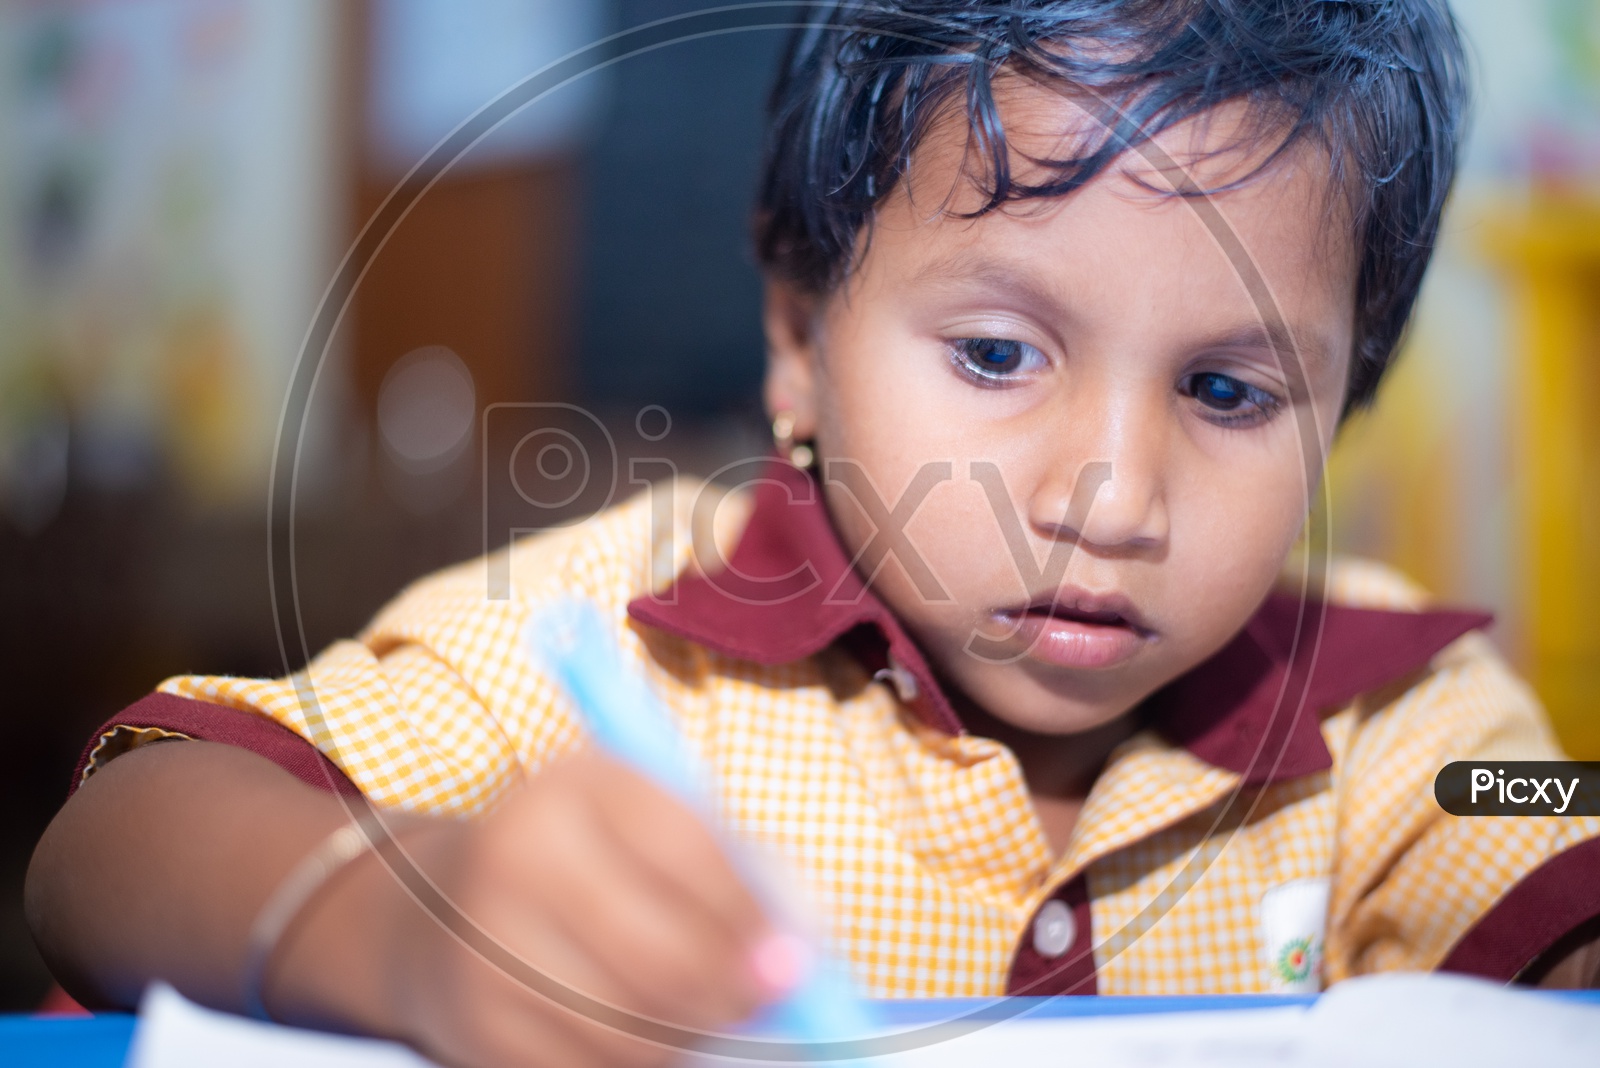 Student writing on a book at an Anganwadi center